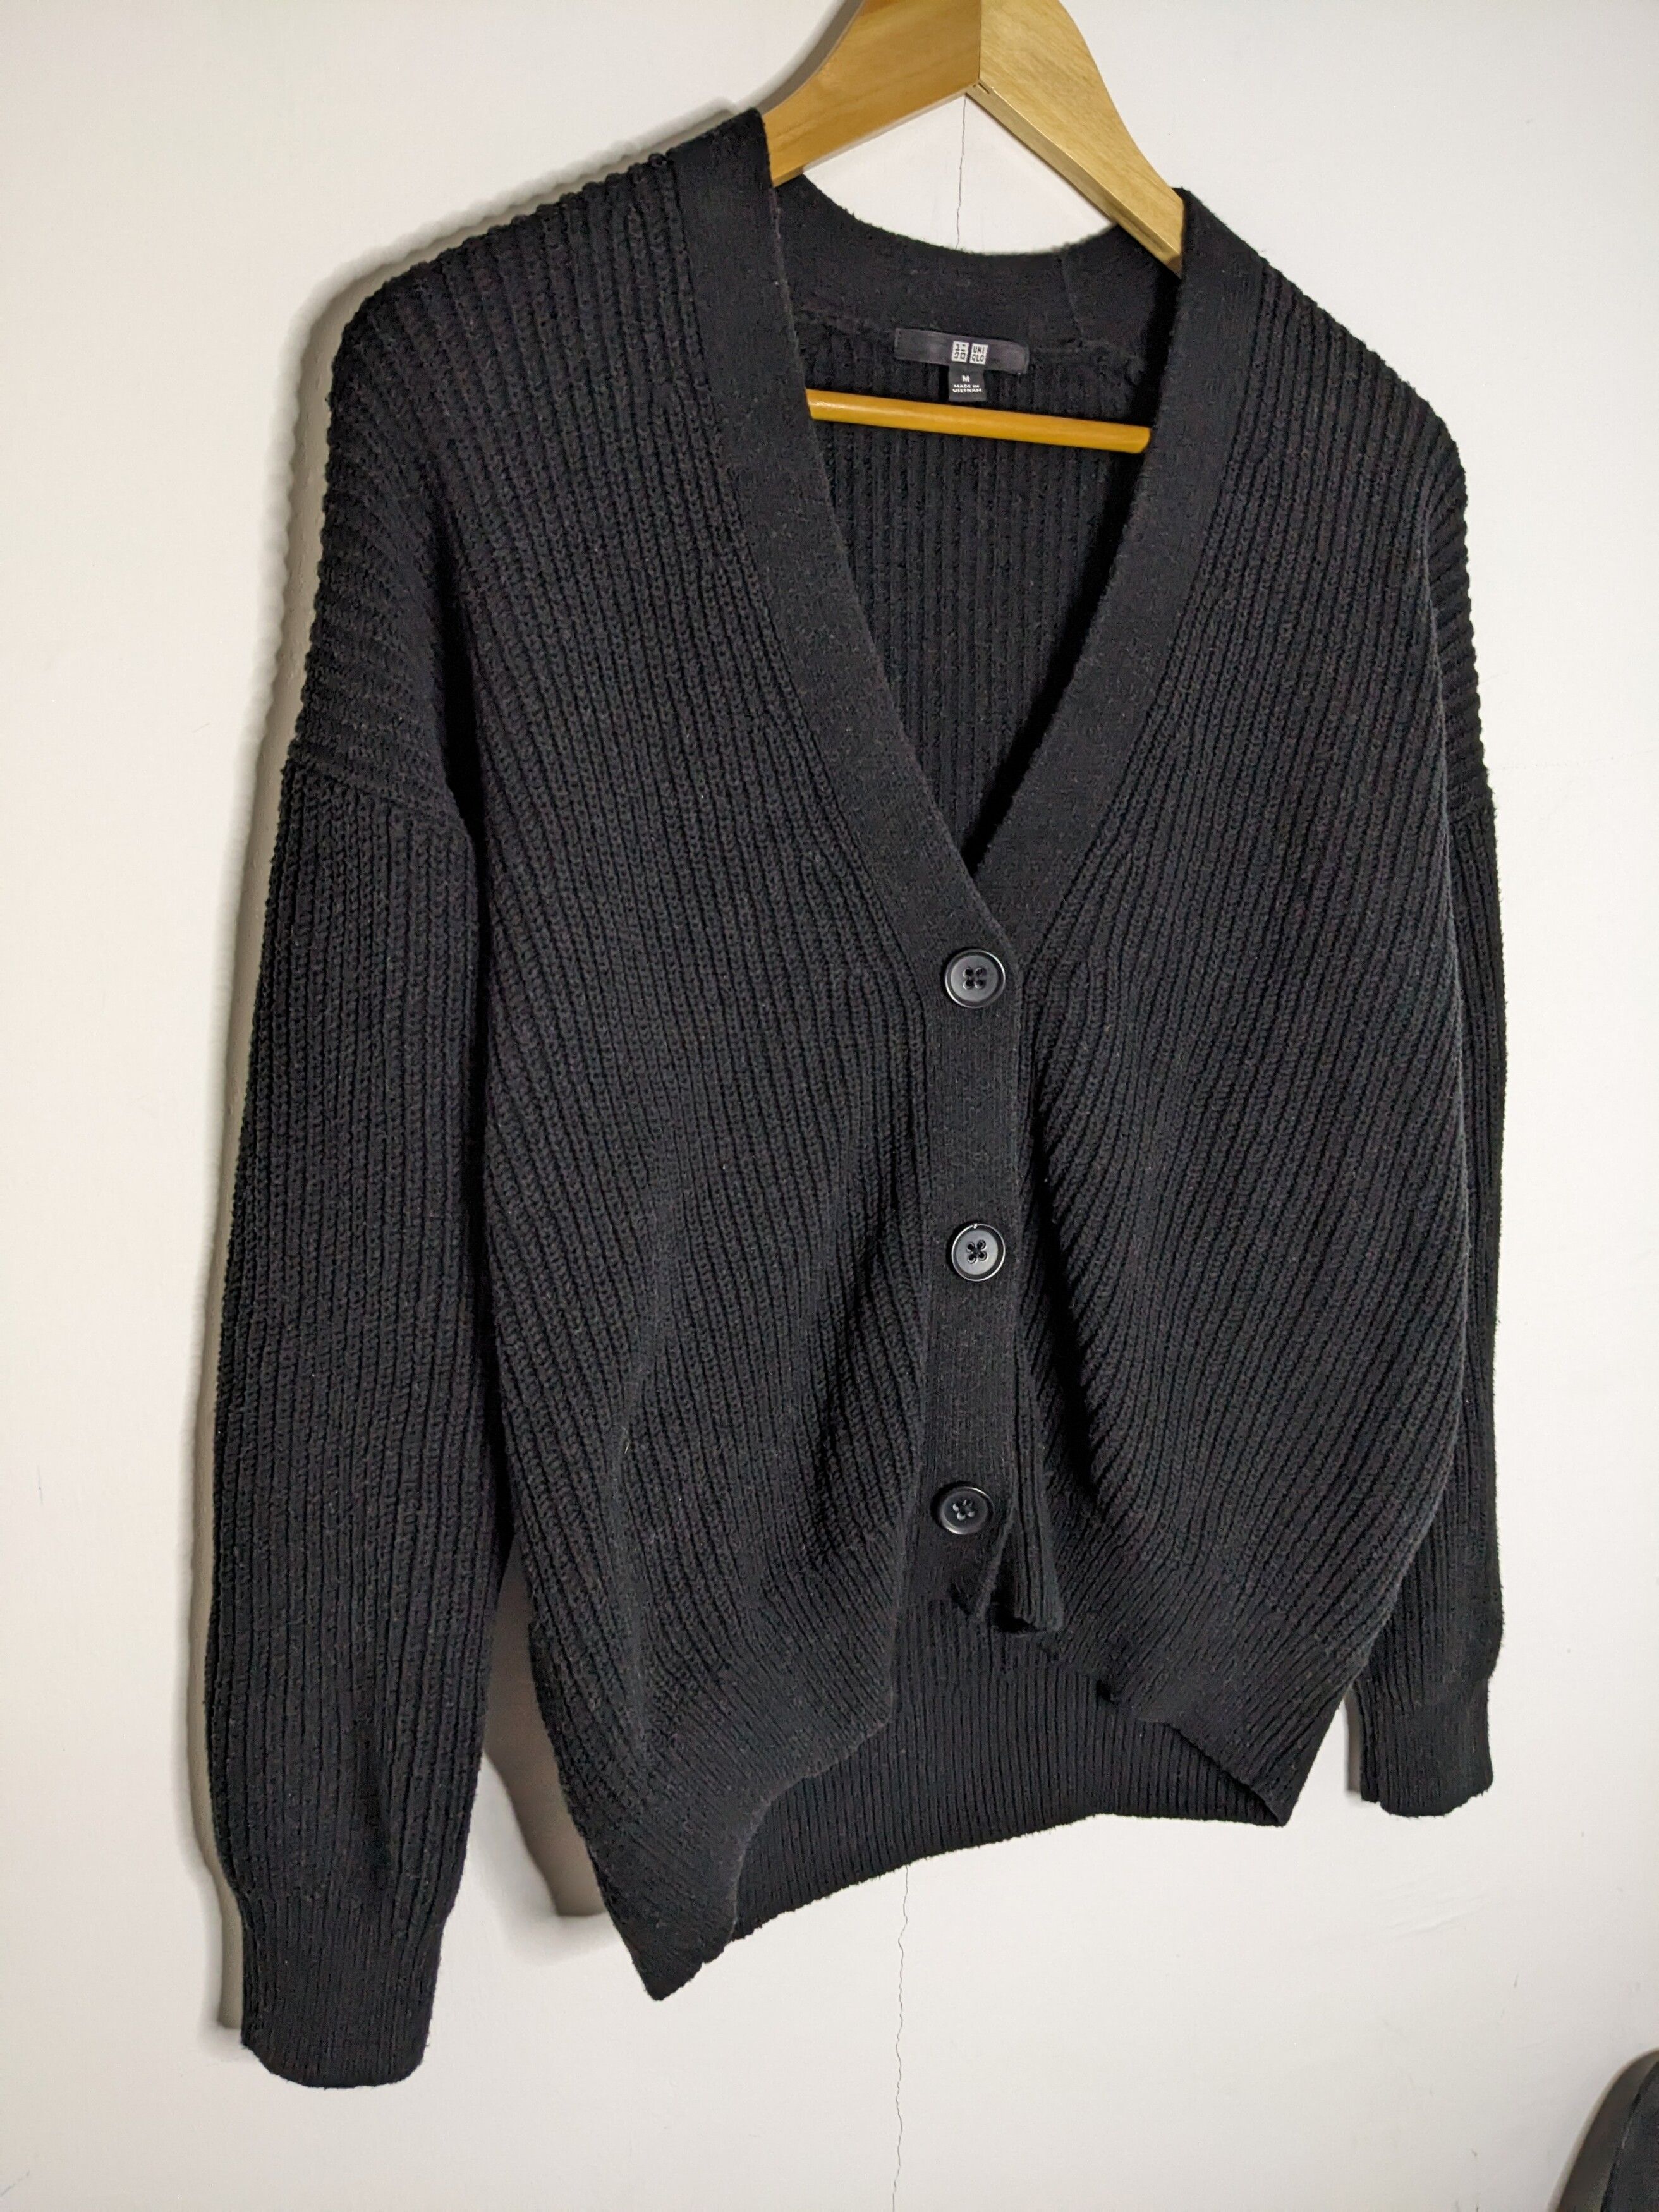 Uniqlo Crocheted Pattern Cotton Knit Sweater Black Cardigan - 2